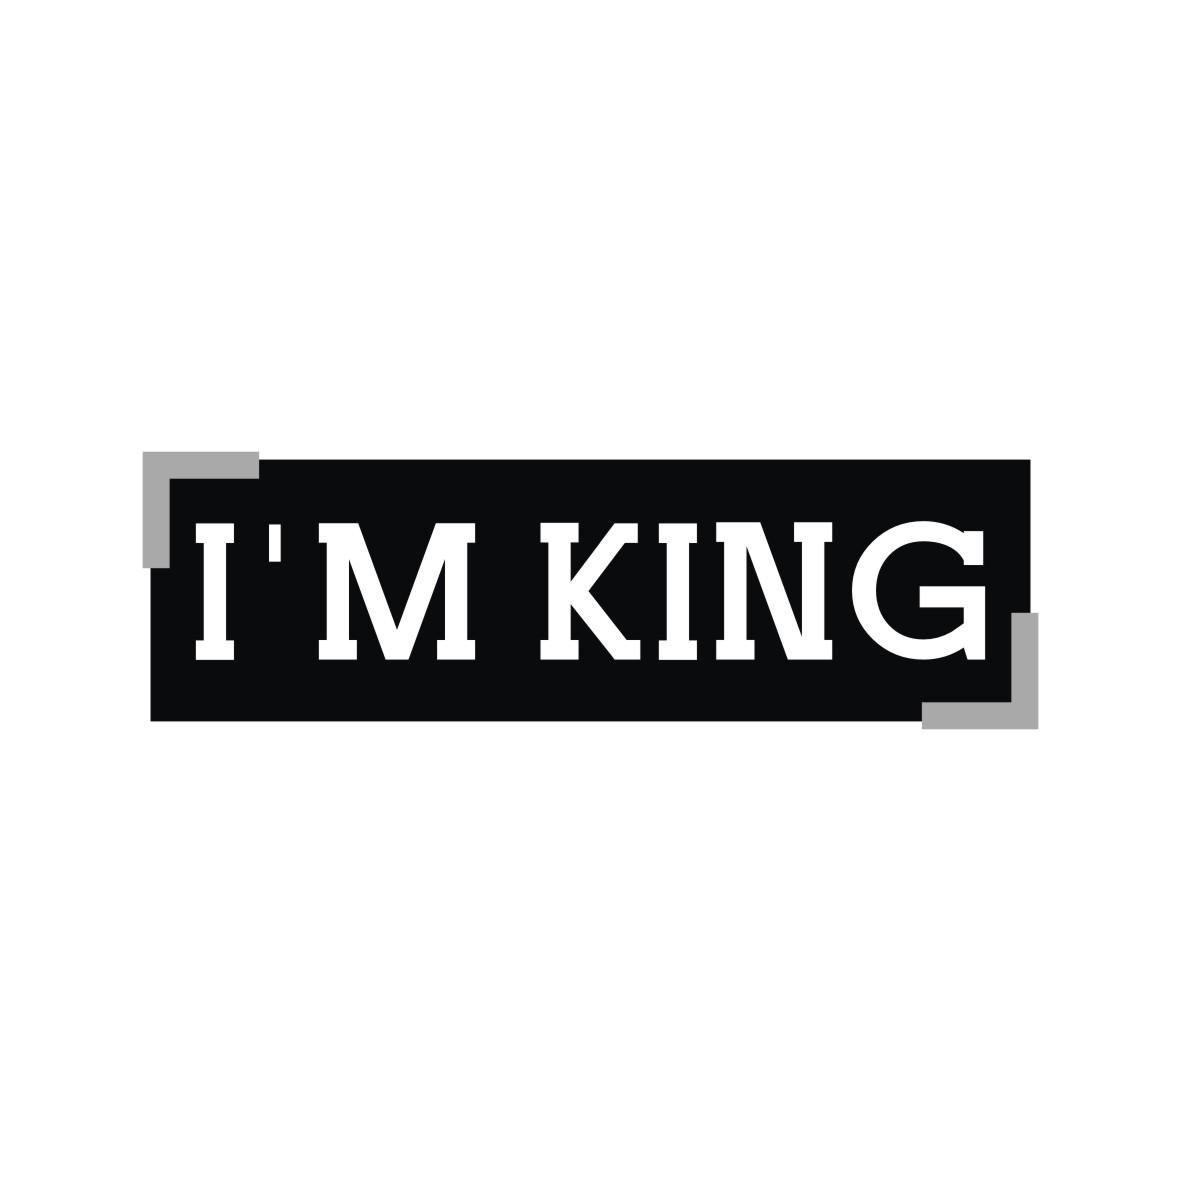 I‘M KING